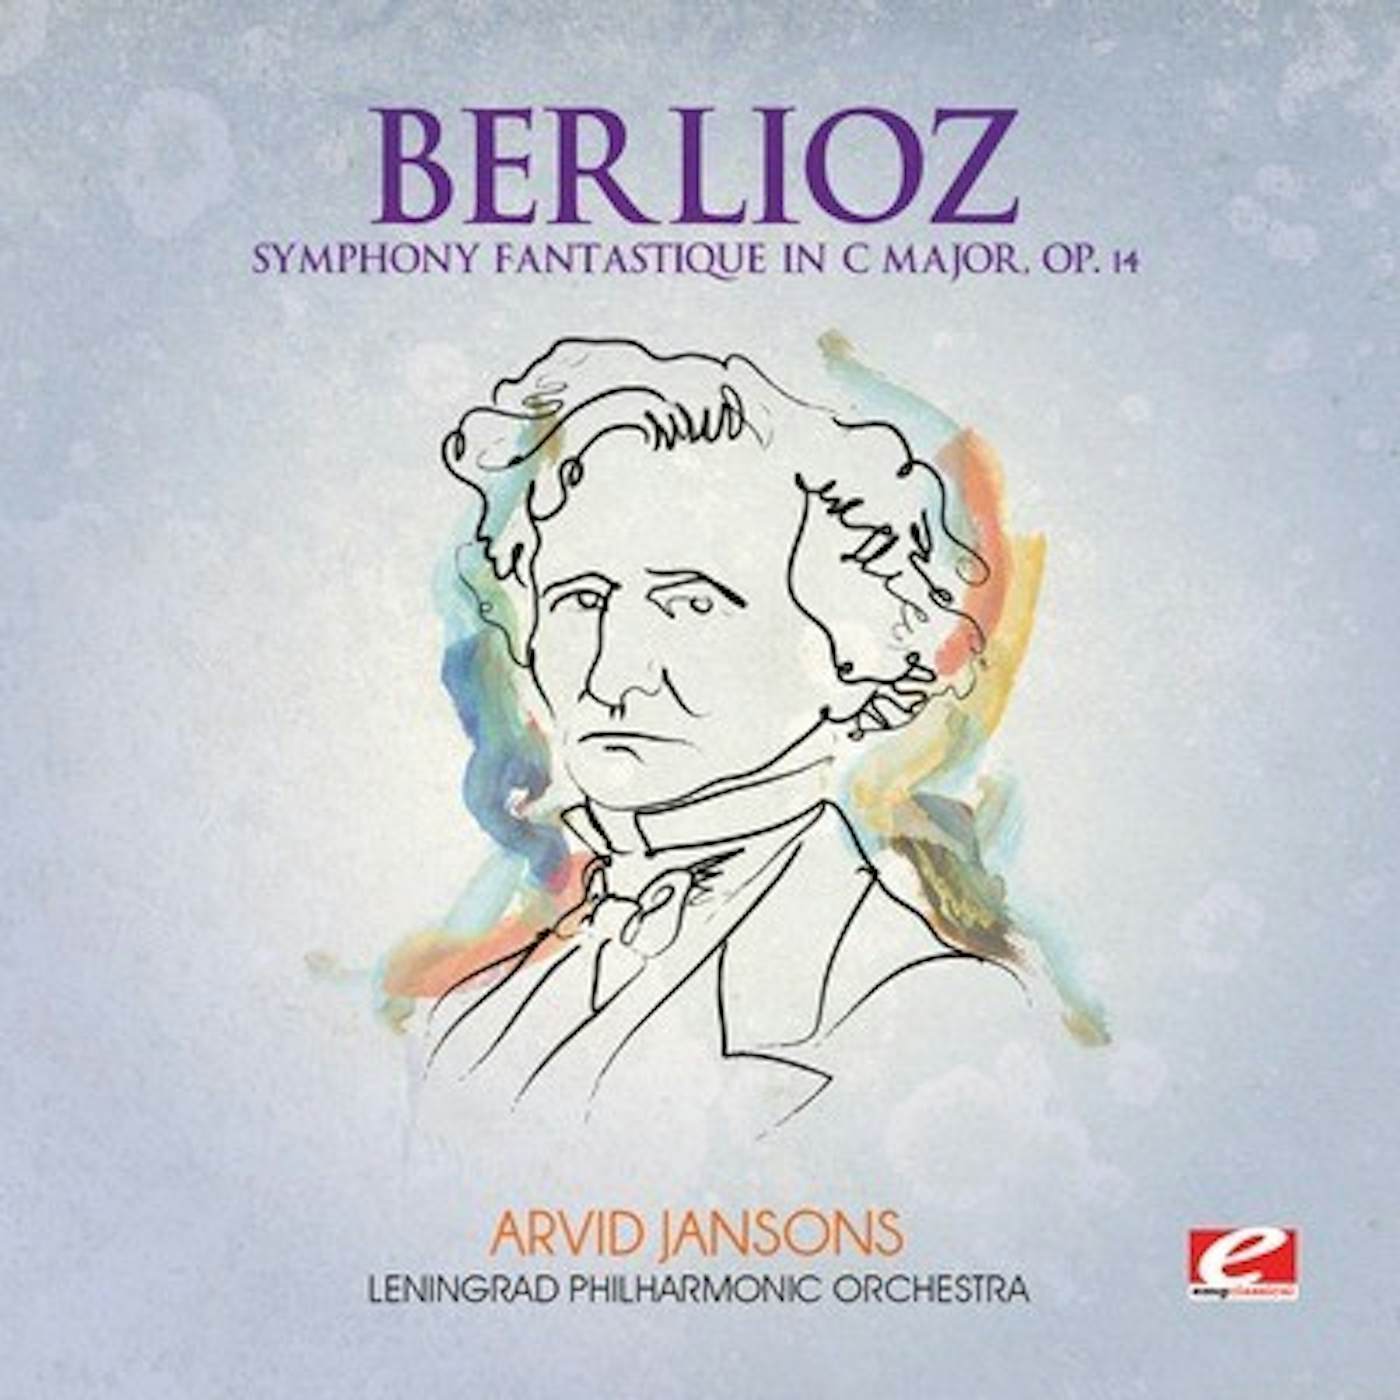 Berlioz SYMPHONY FANTASTIQUE IN C MAJOR CD